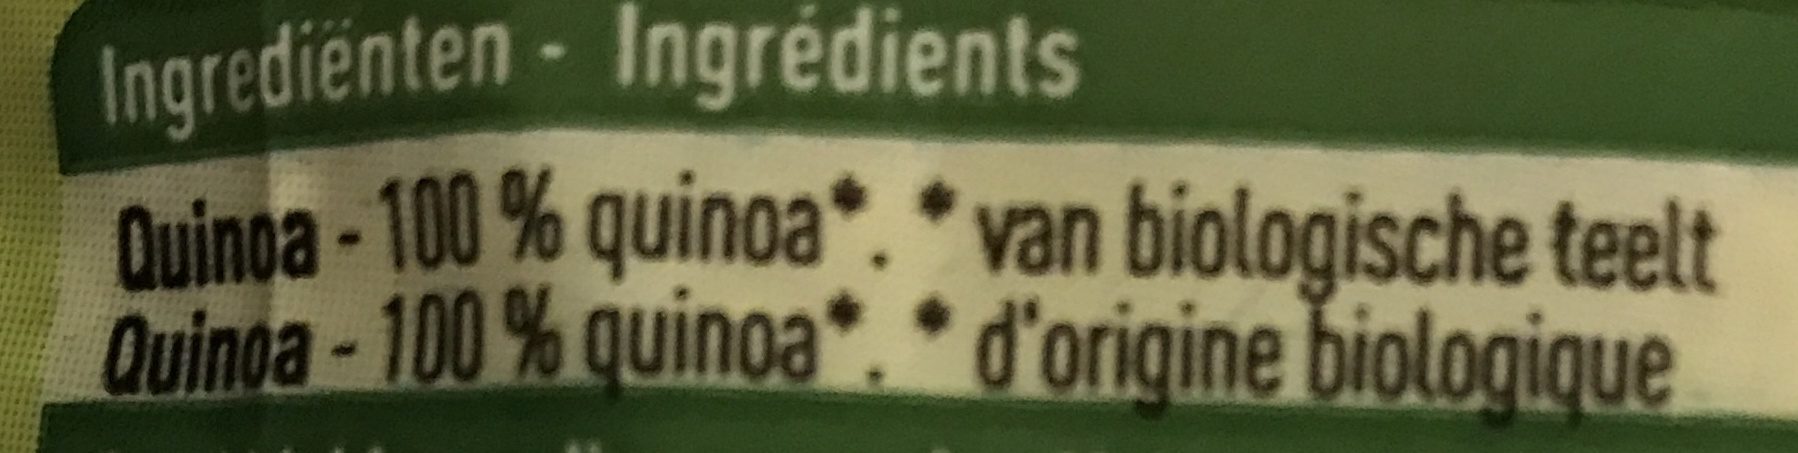 Bio quinoa - Ingrediënten - fr